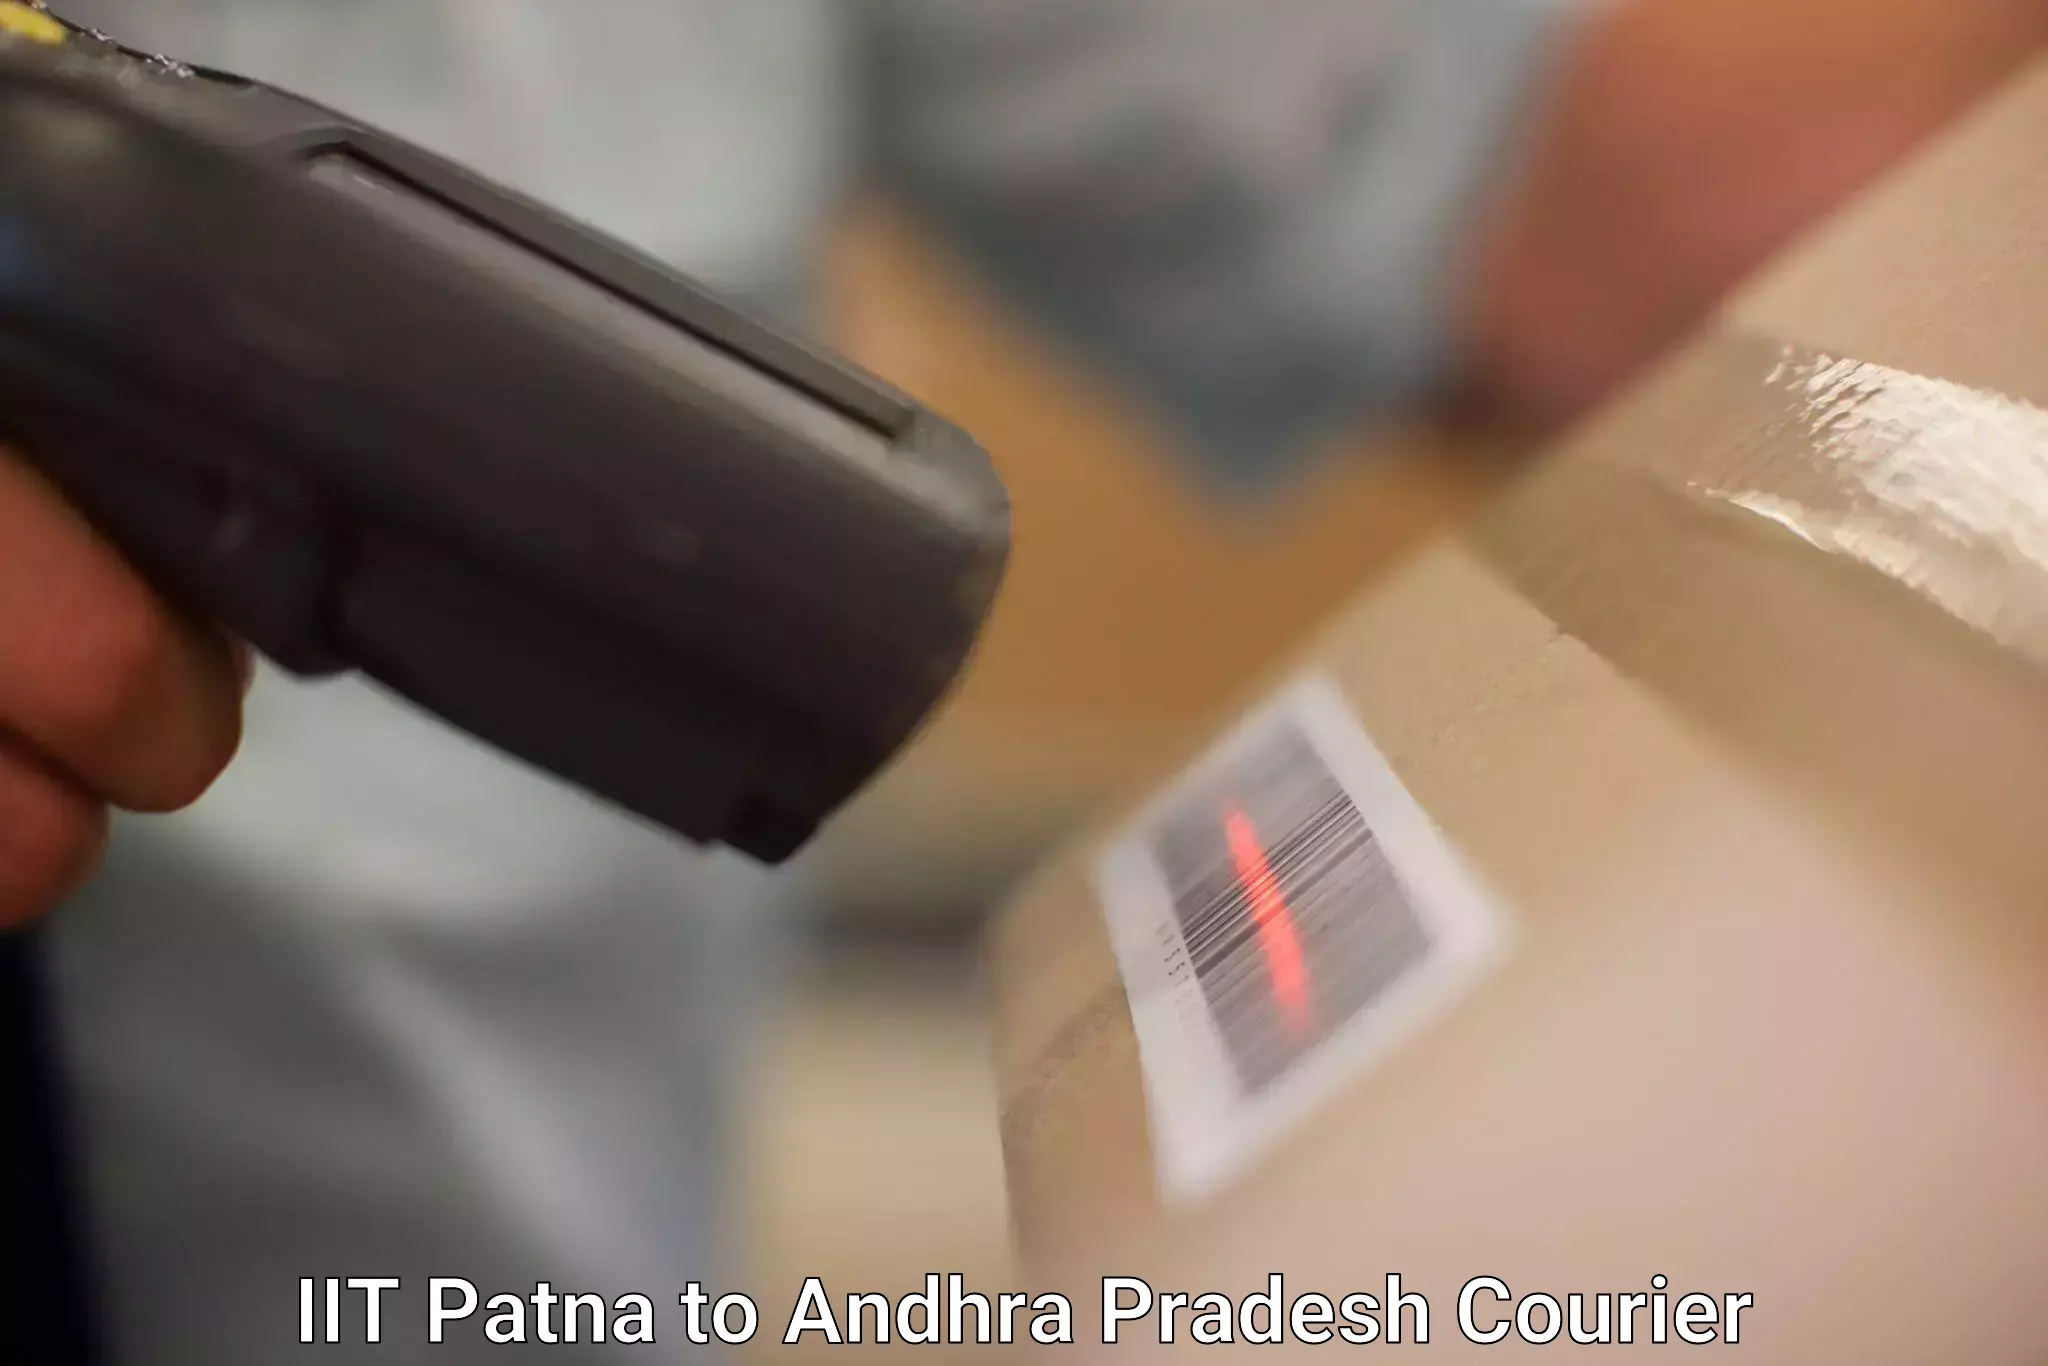 Express courier capabilities IIT Patna to Andhra Pradesh